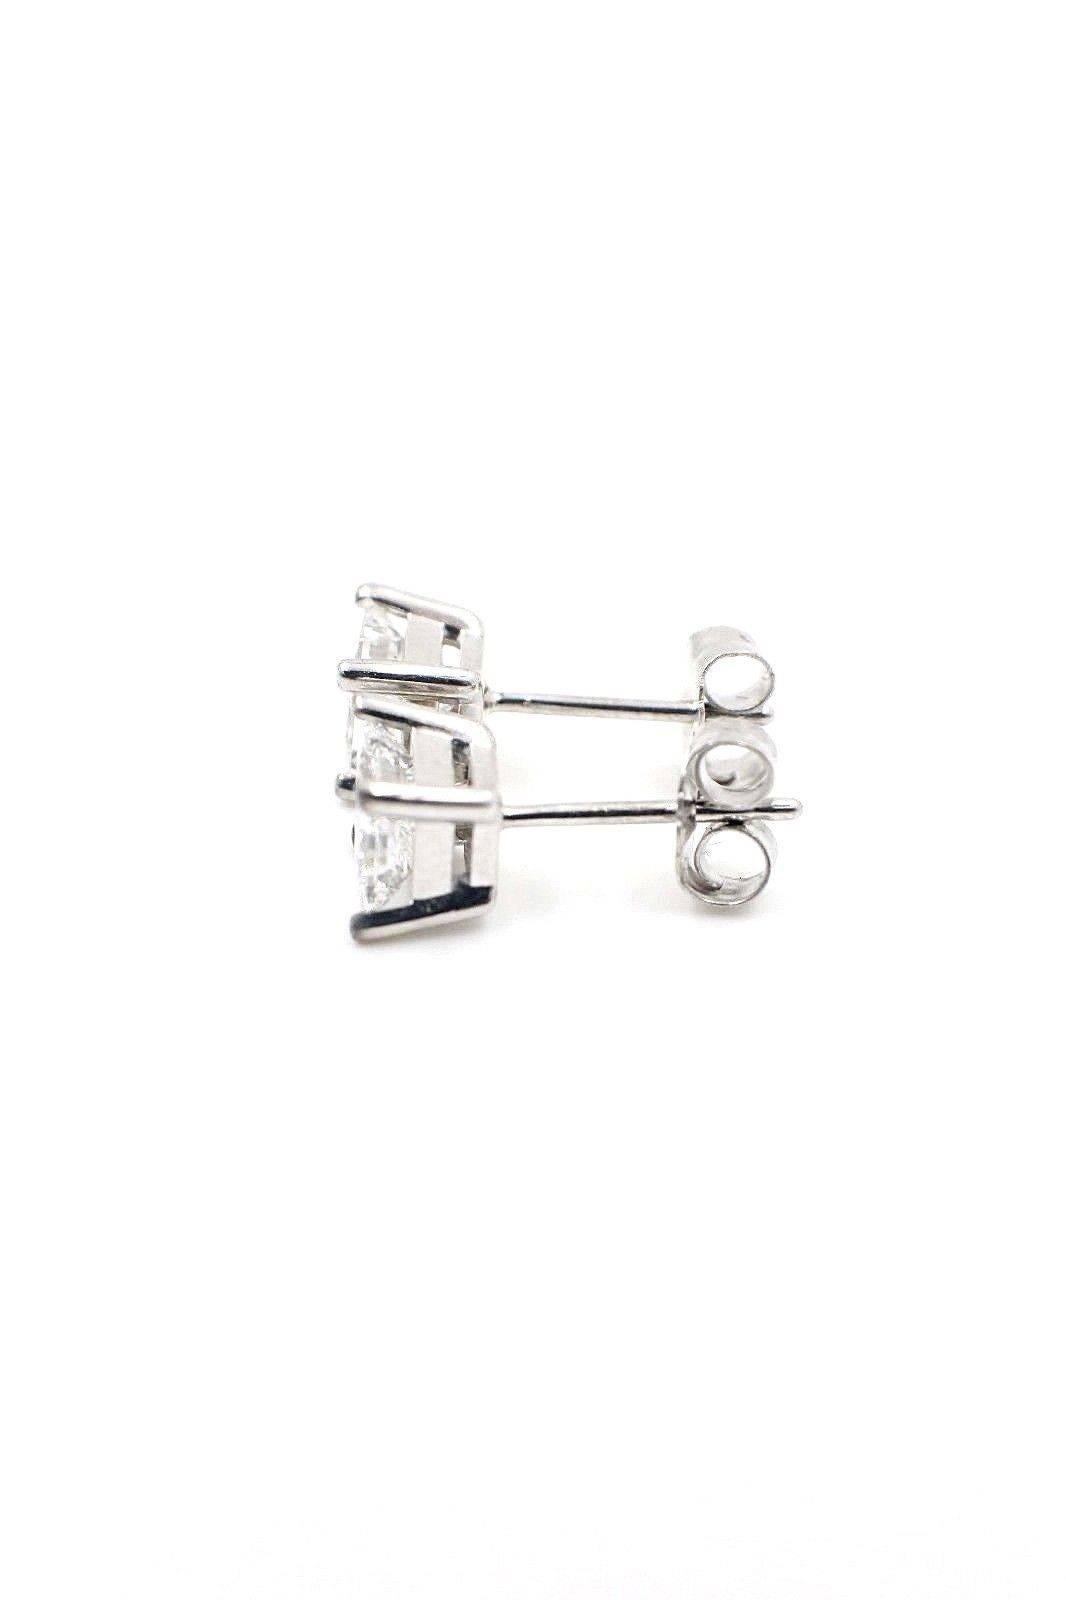 Princess Cut Diamond Stud Earrings 1.21 Carat Set in 14 Karat White Gold 1